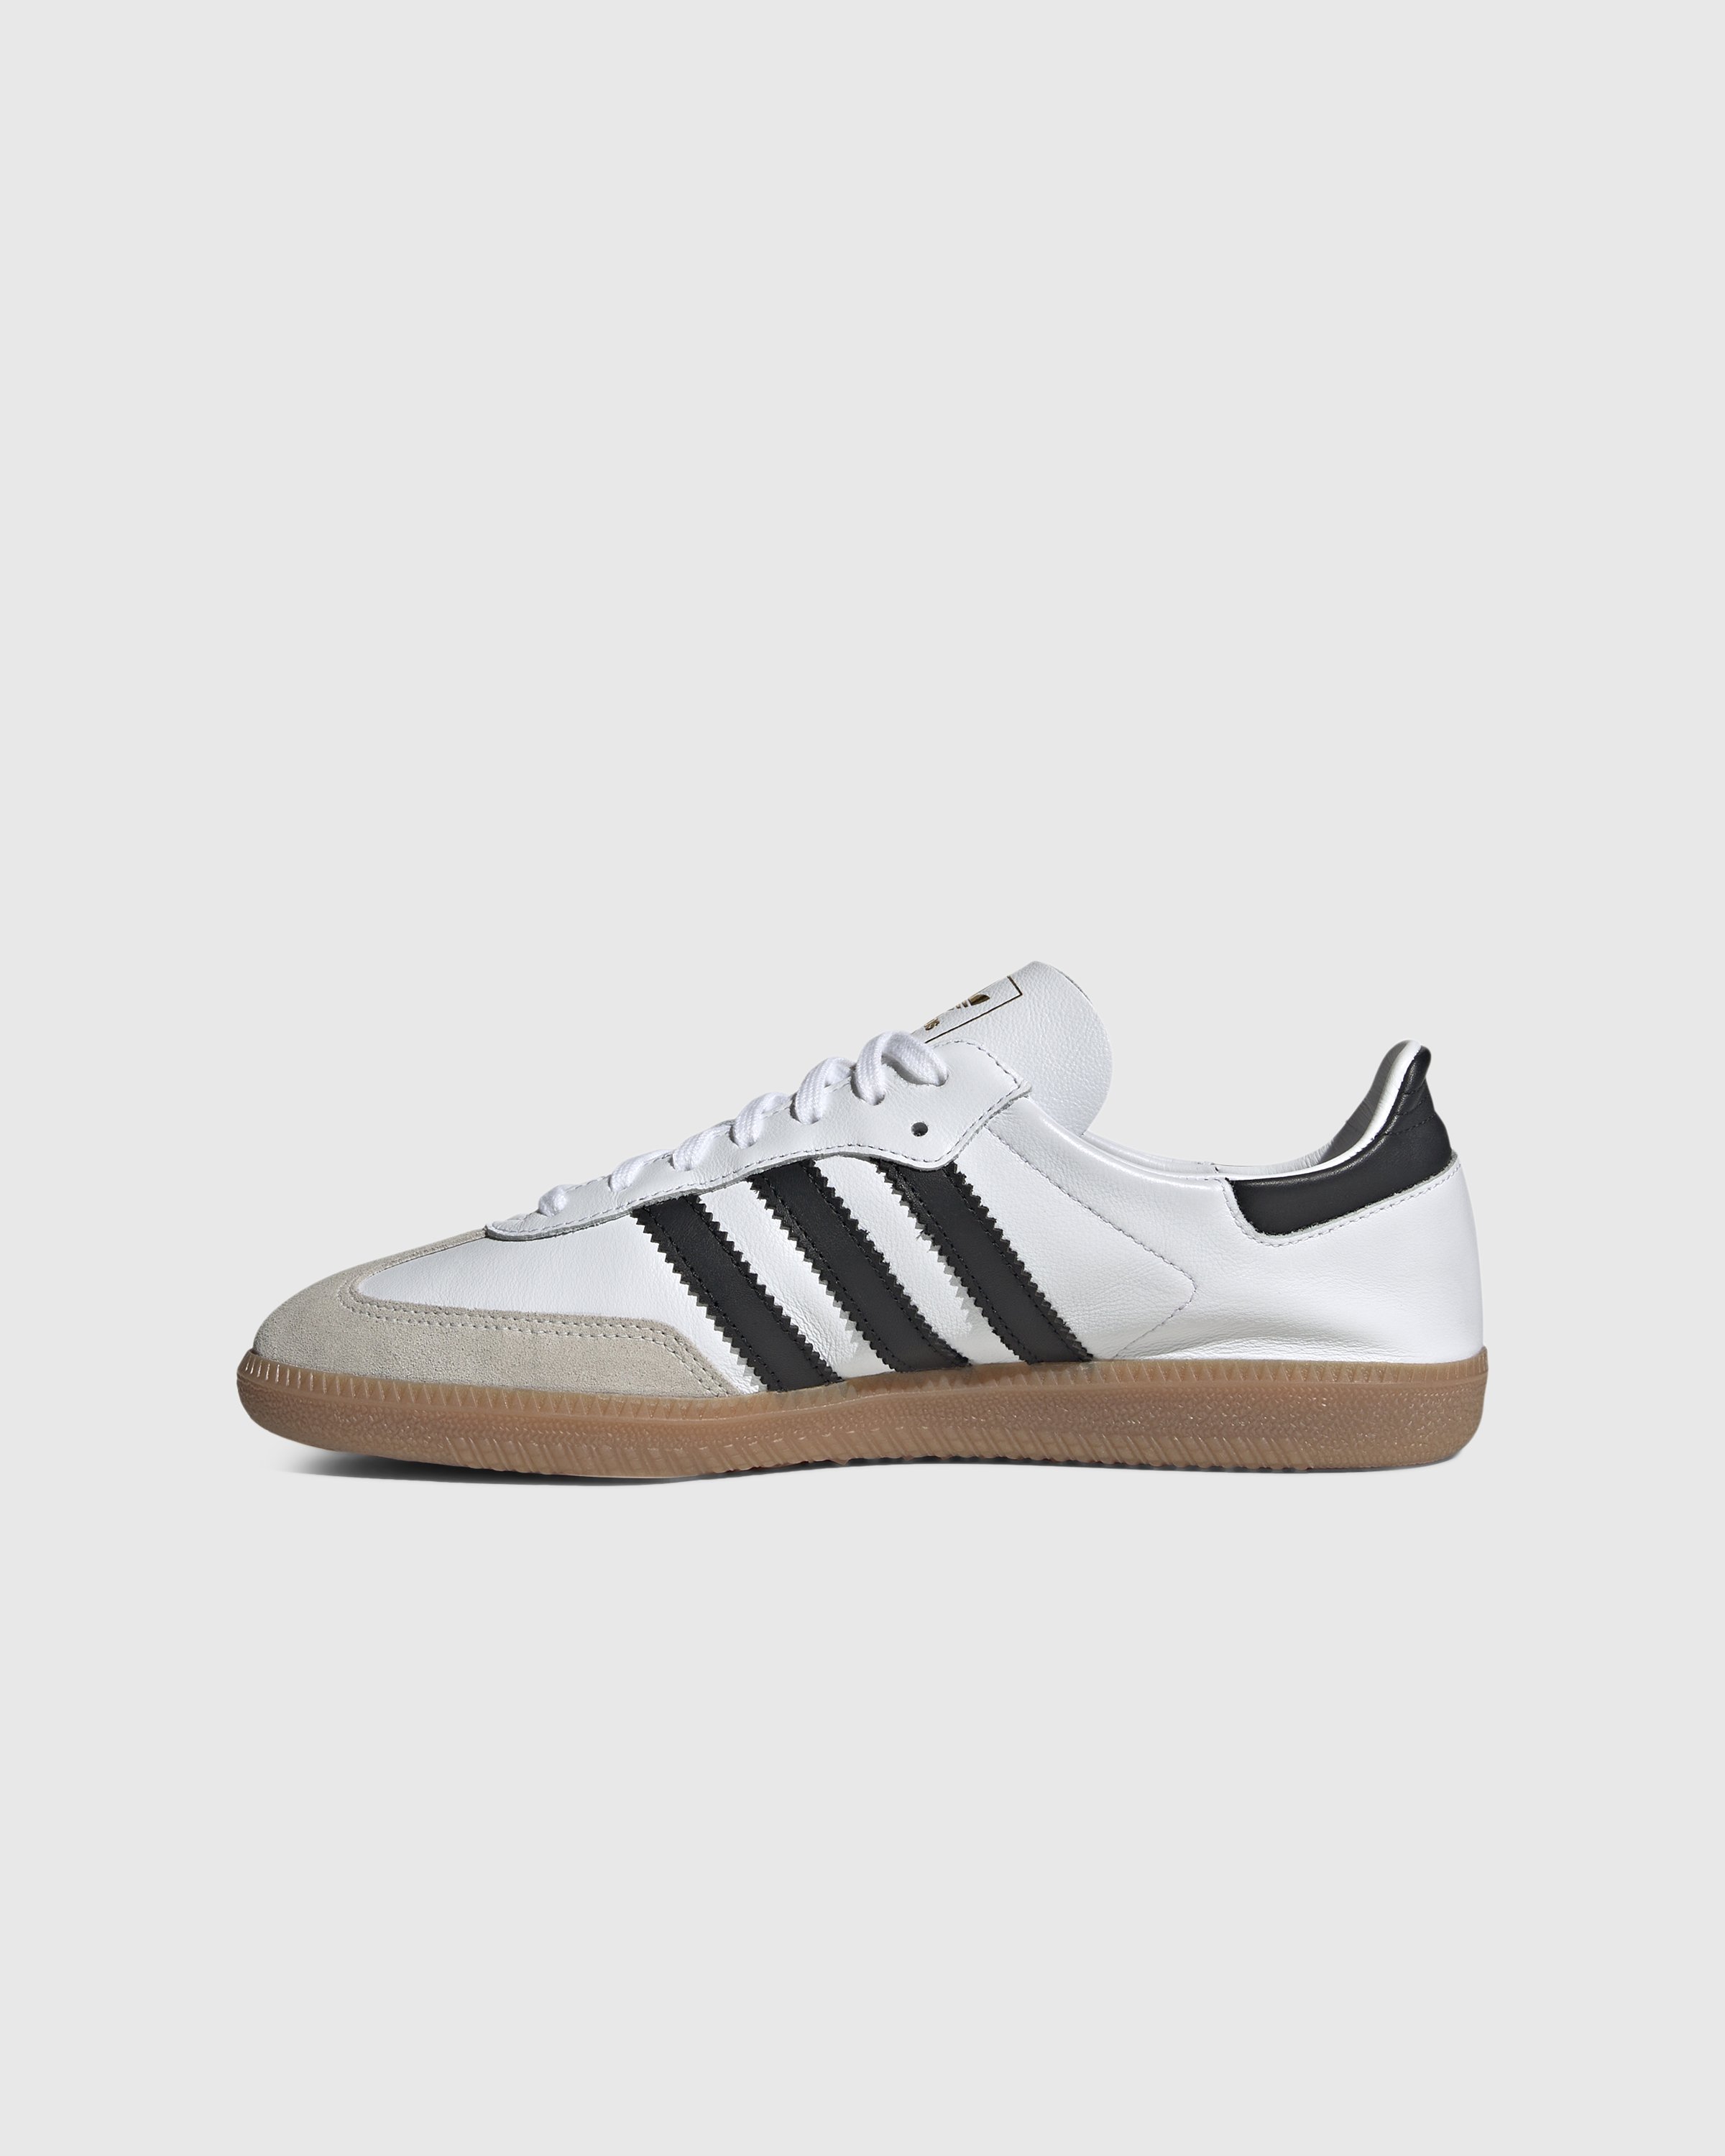 Adidas - Samba Decon White/Black/Greone - Footwear - White - Image 2